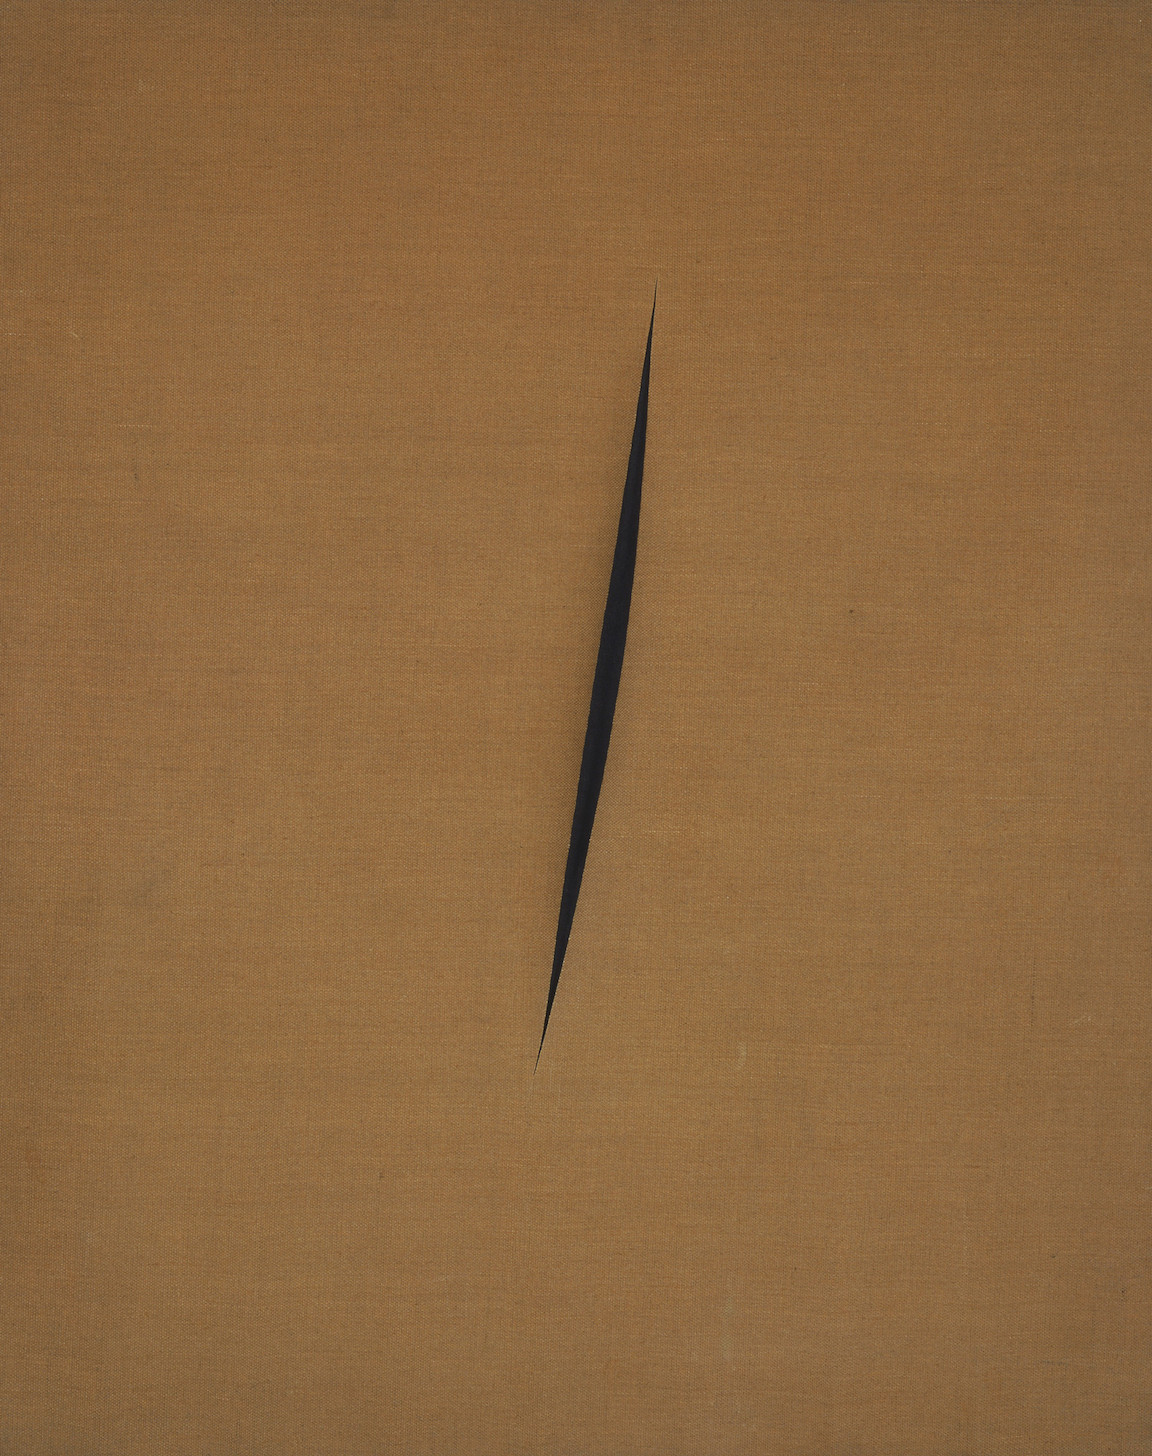 Lucio Fontana, (Spatial Concept: Expectations), 1960, slashed canvas and gauze, 100.3 x 80.3 cm (MoMA, New York) © Fondation Lucio Fontana